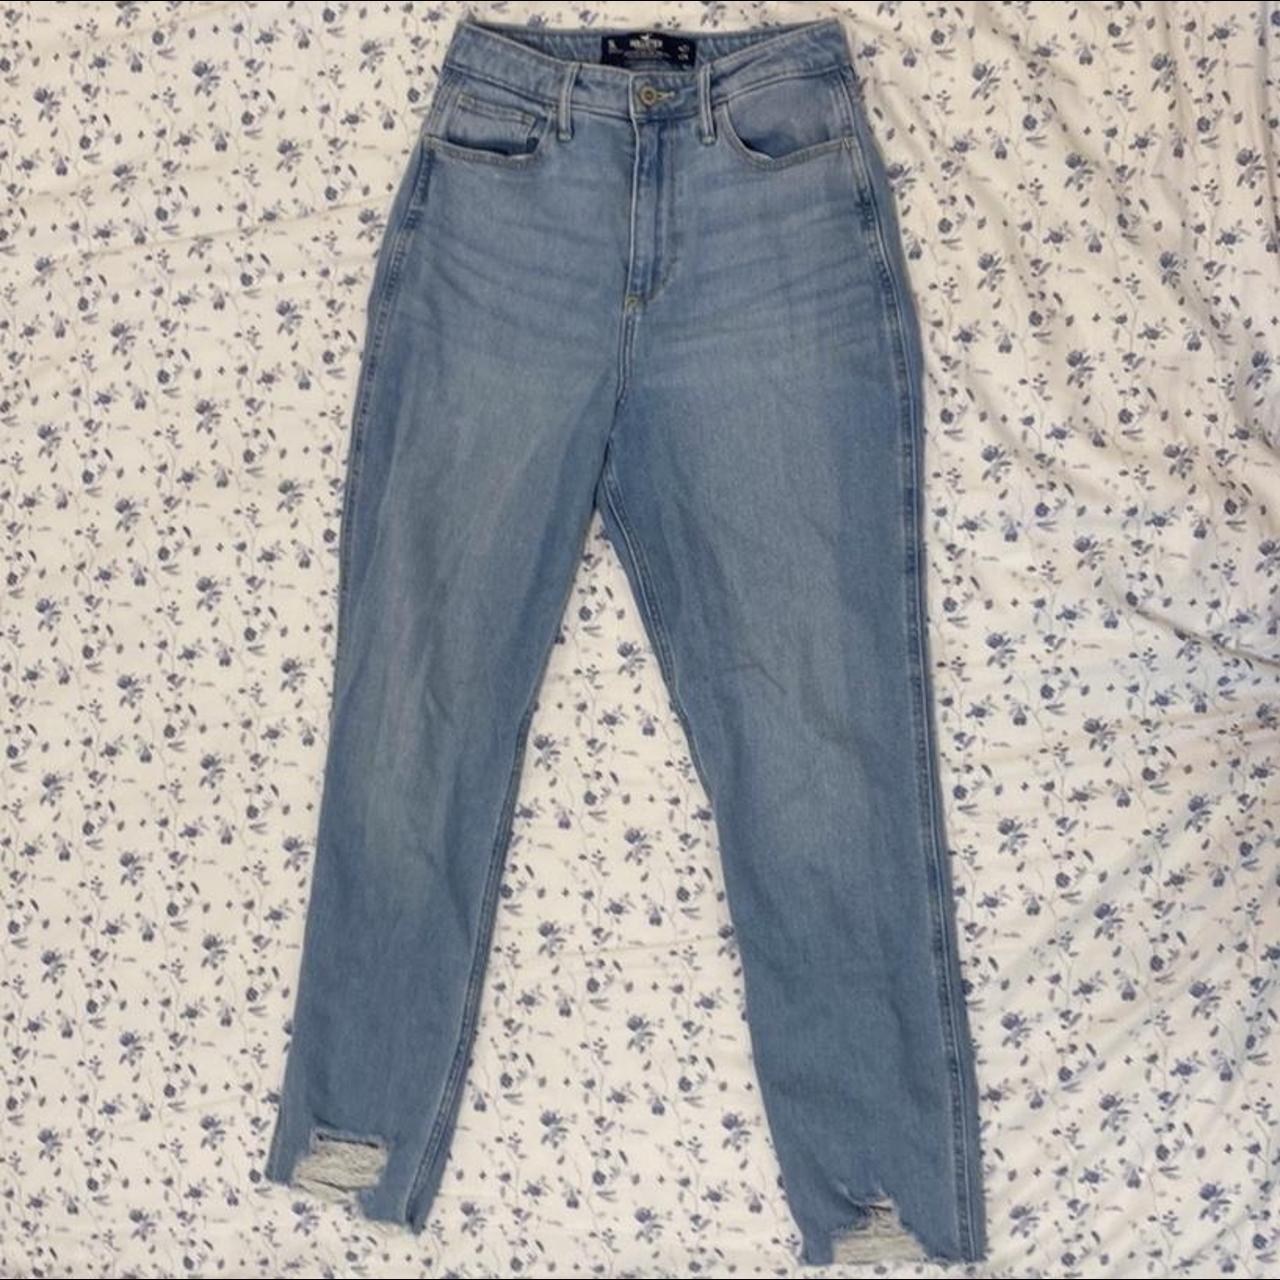 hollister curvy ultra high-rise mom jeans - Depop